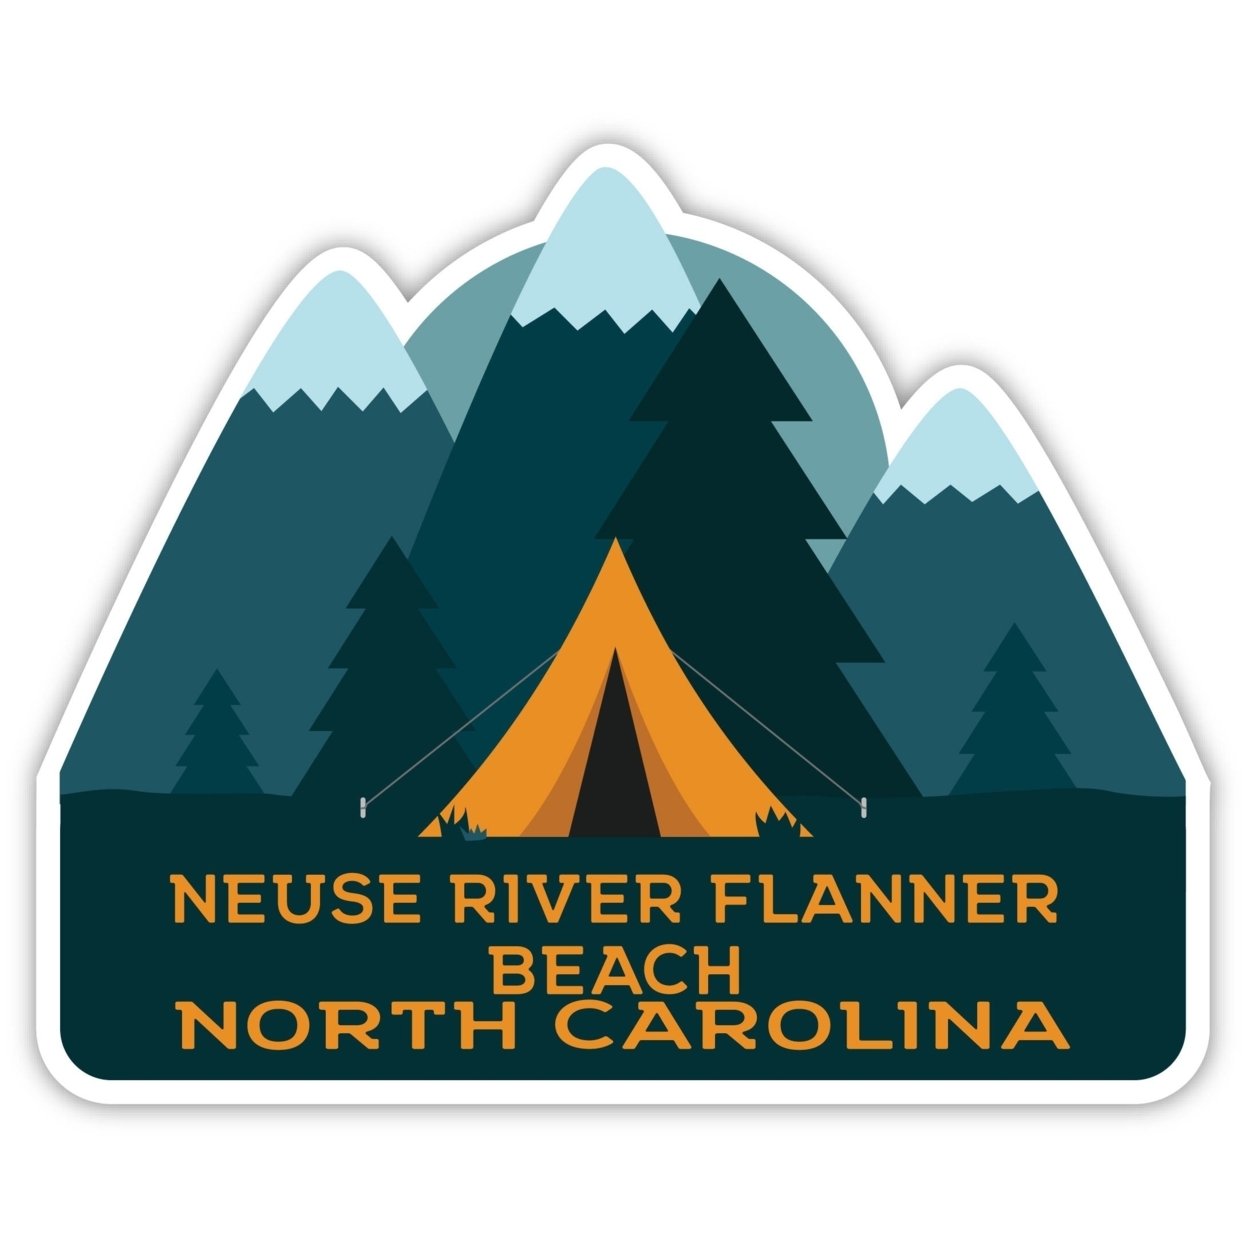 Neuse River Flanner Beach North Carolina Souvenir Decorative Stickers (Choose Theme And Size) - Single Unit, 4-Inch, Tent